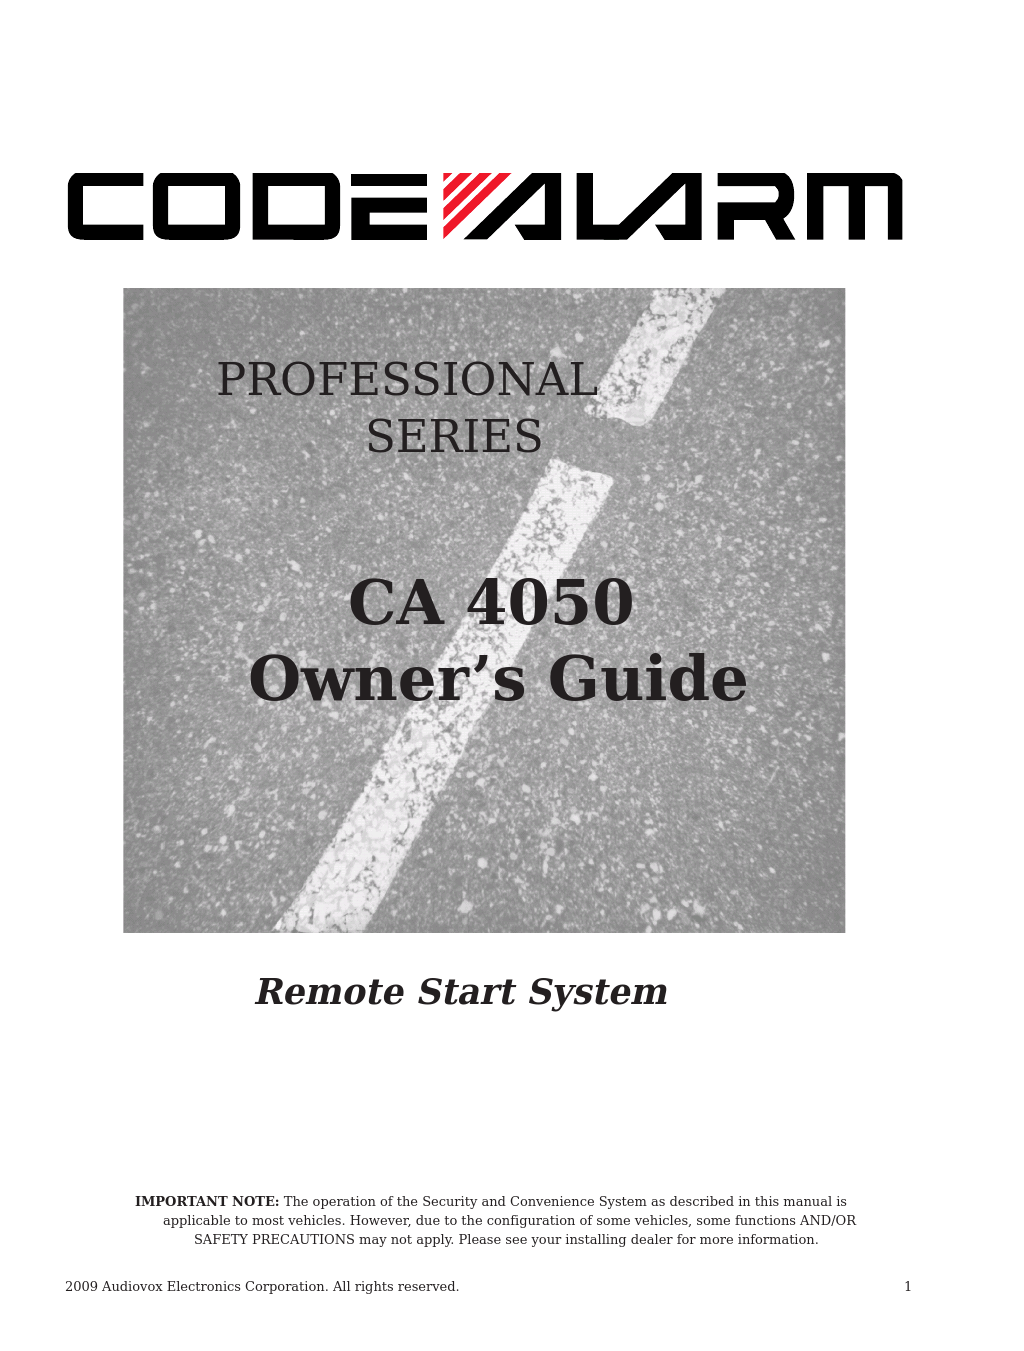 Professional Series CA 4050